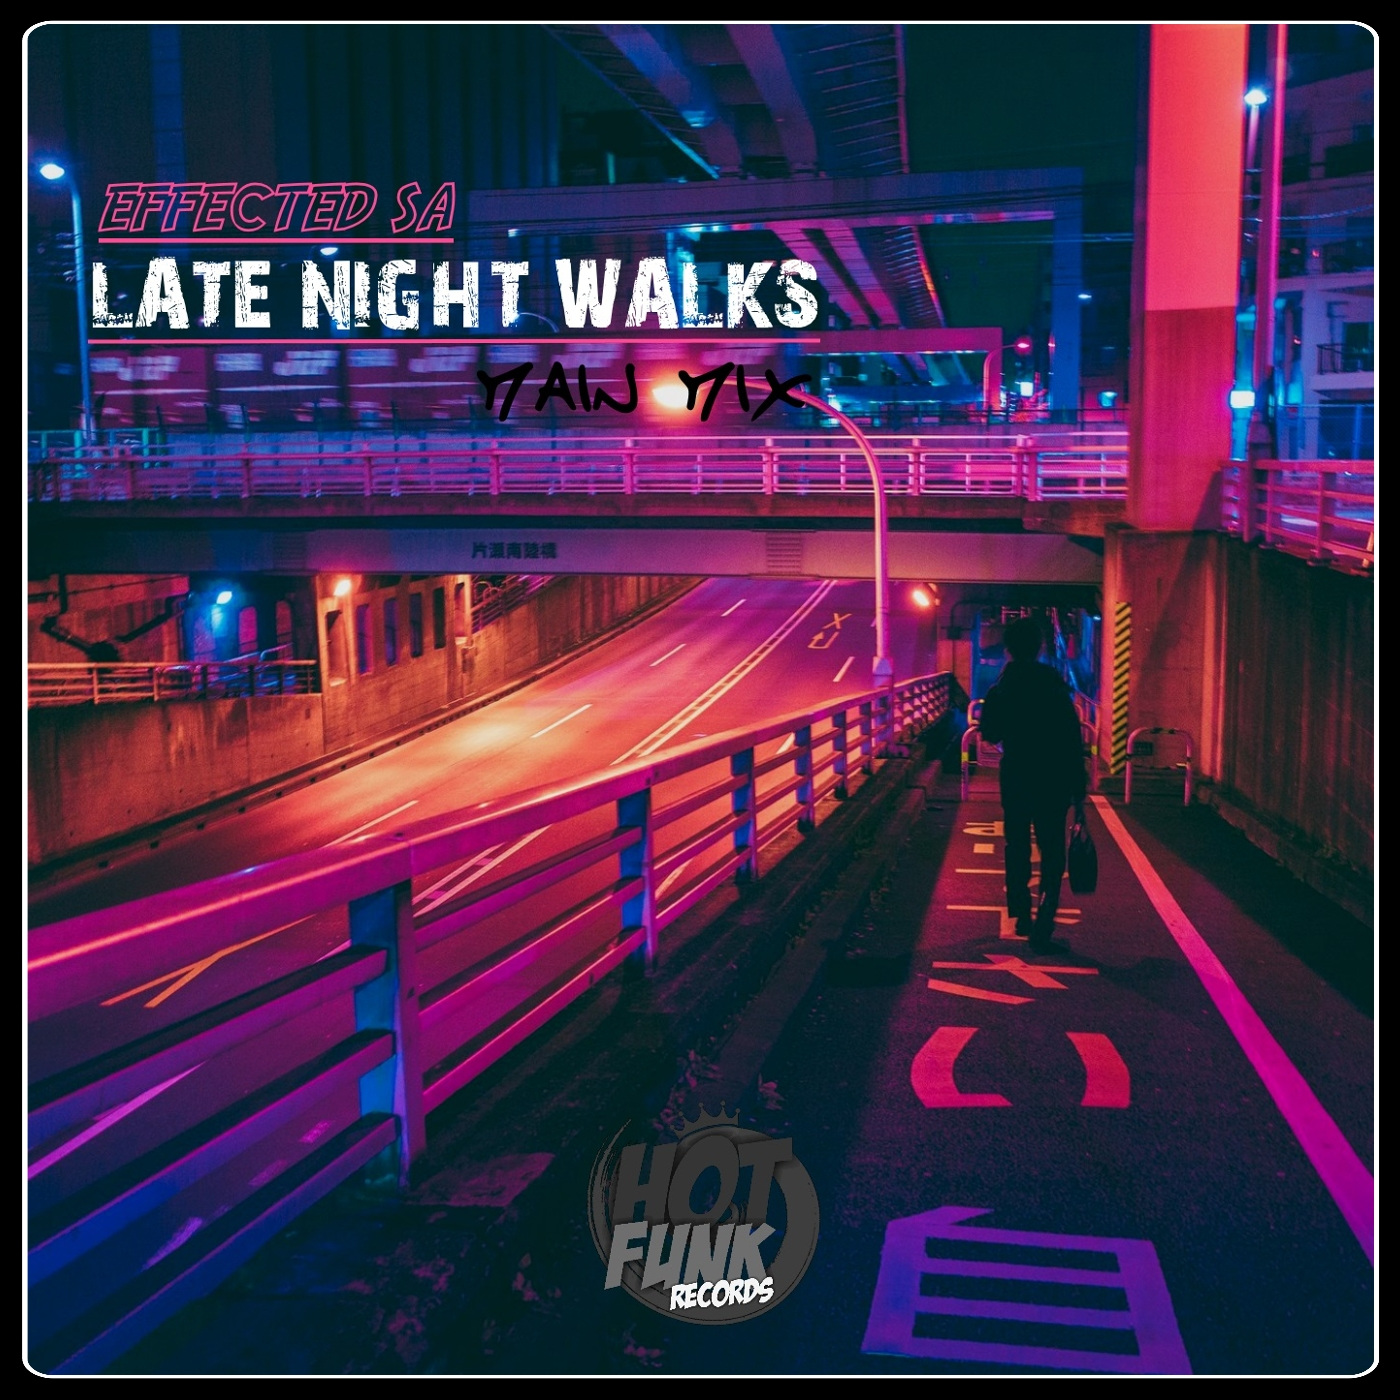 Effected SA - Late Night Walks / Hot Funk Records